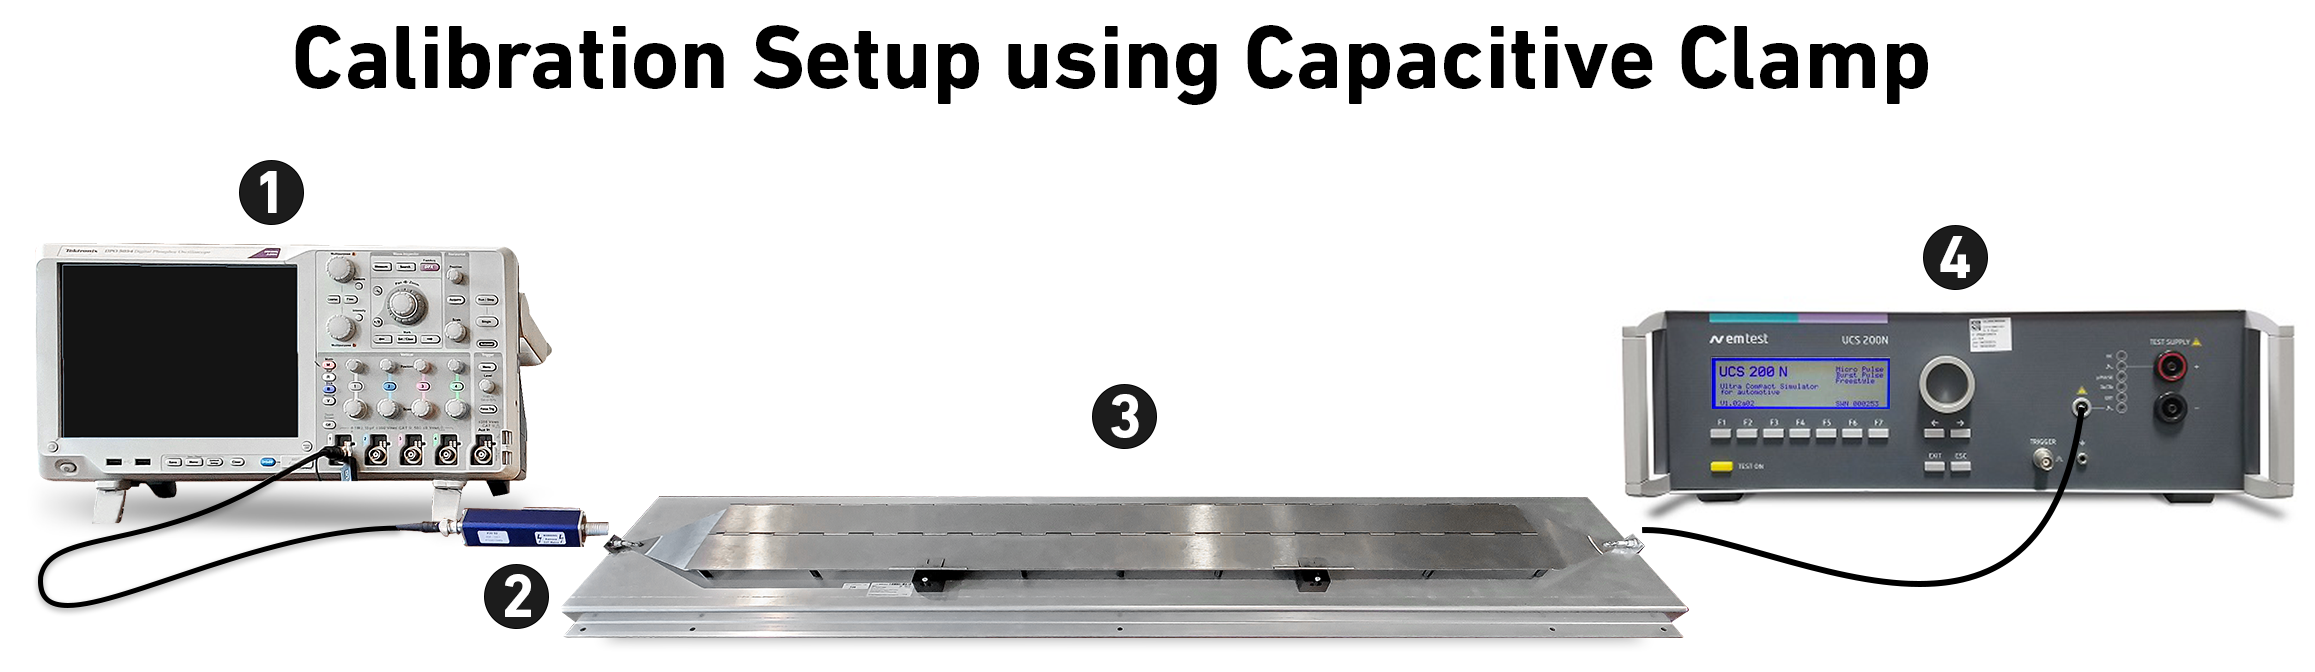 CCC Calibration/verification setup using capacitive clamp